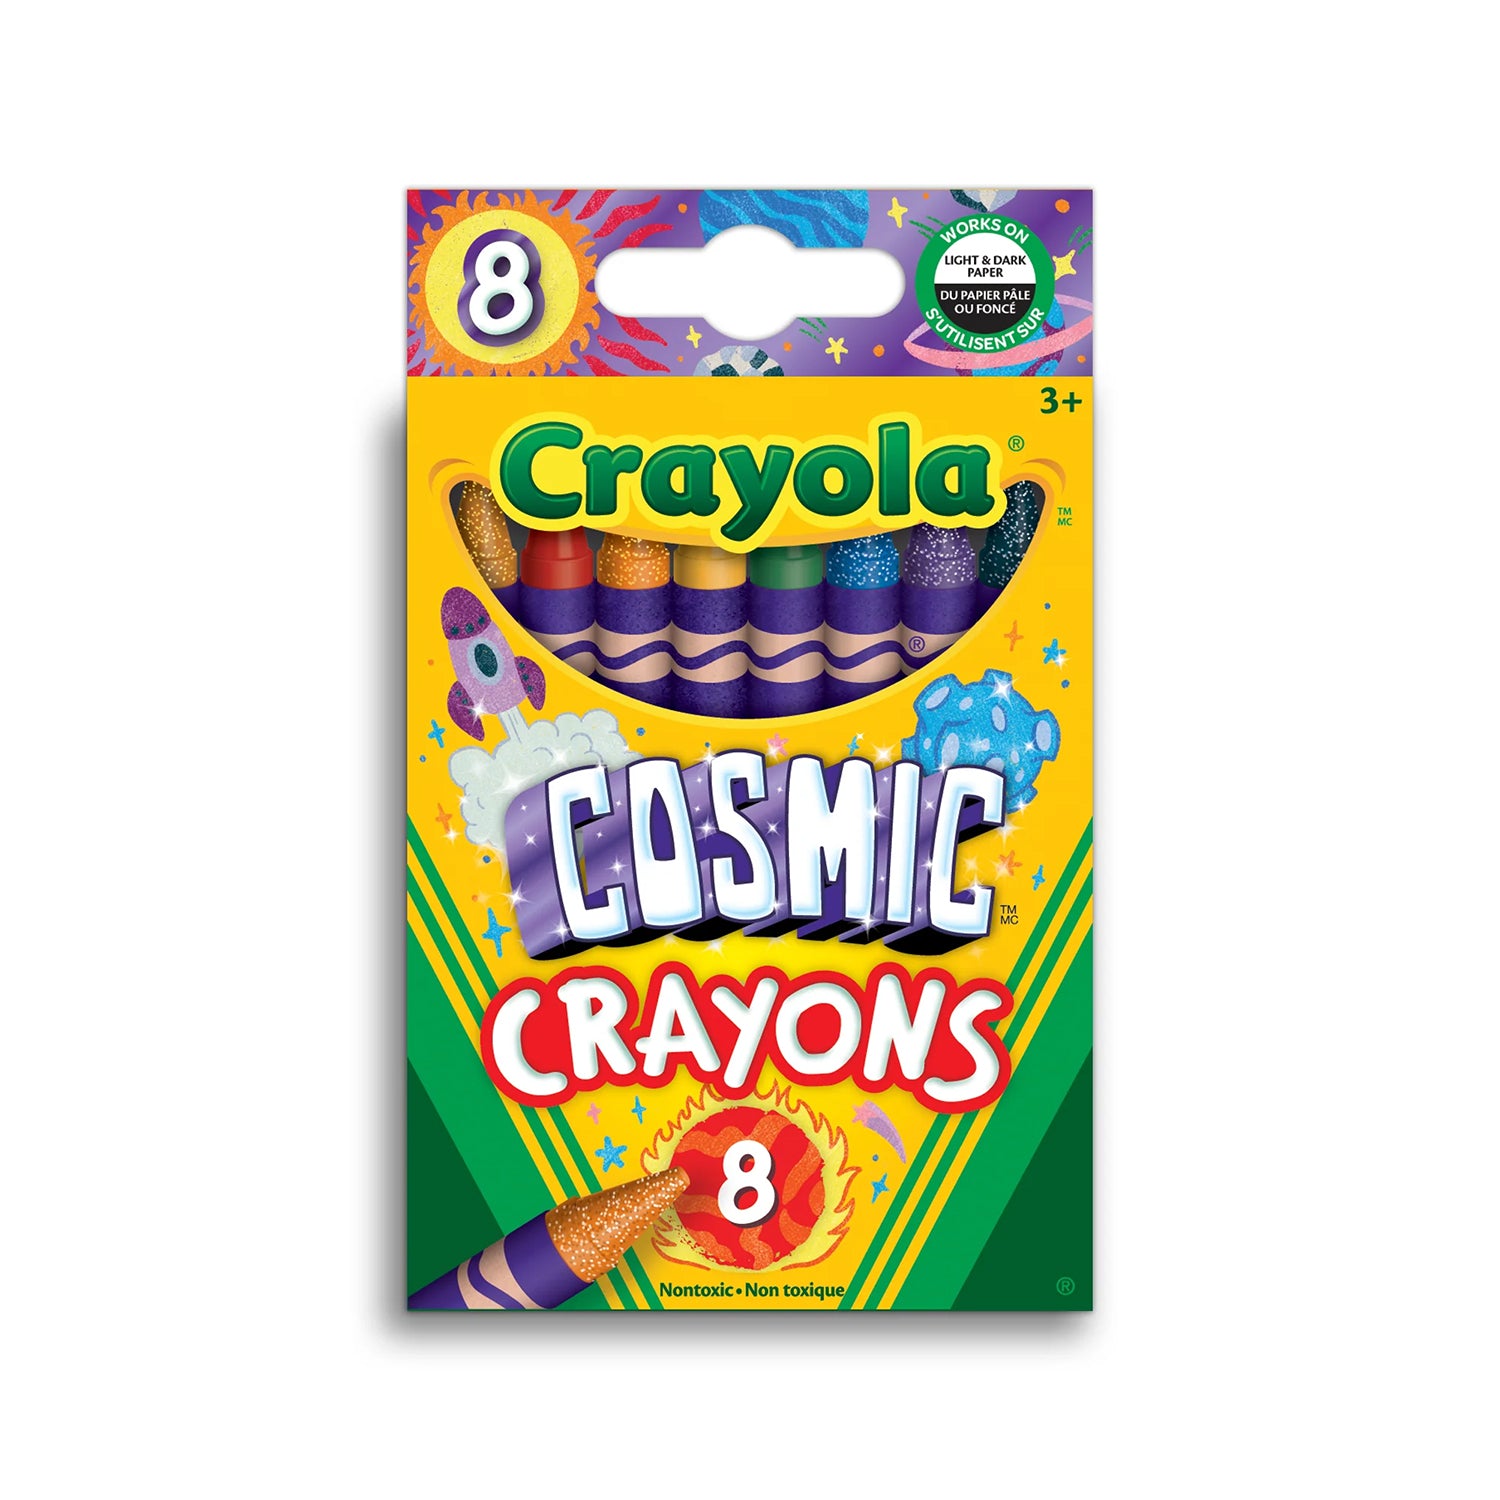 Crayola Marker Mixer Art Kit, Beginner Child, over 50 Pieces